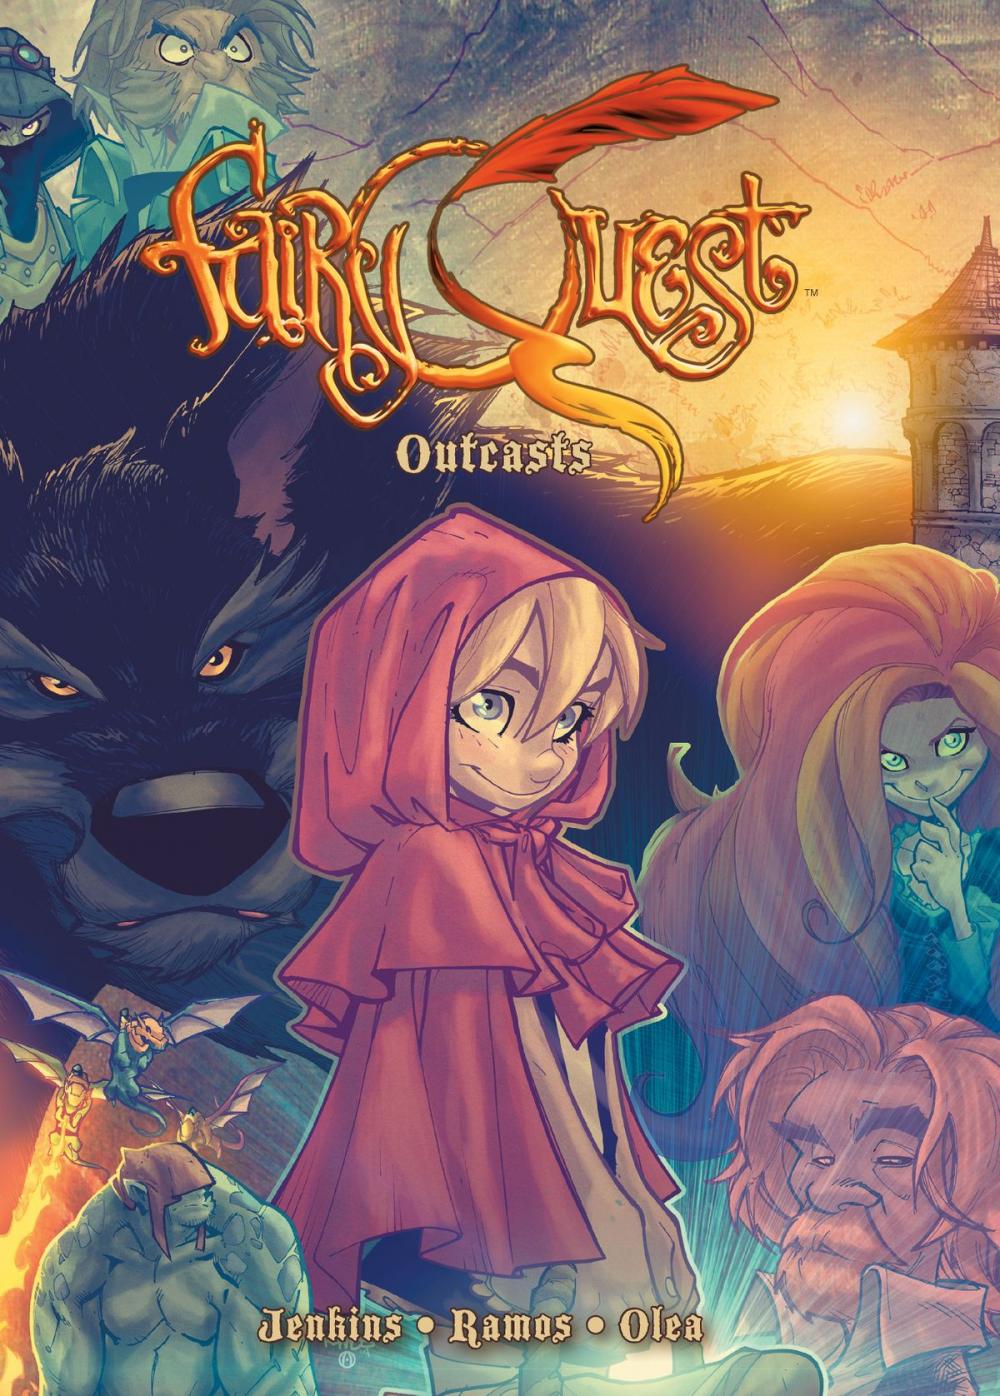 Big bigCover of Fairy Quest Vol. 2 Outcasts